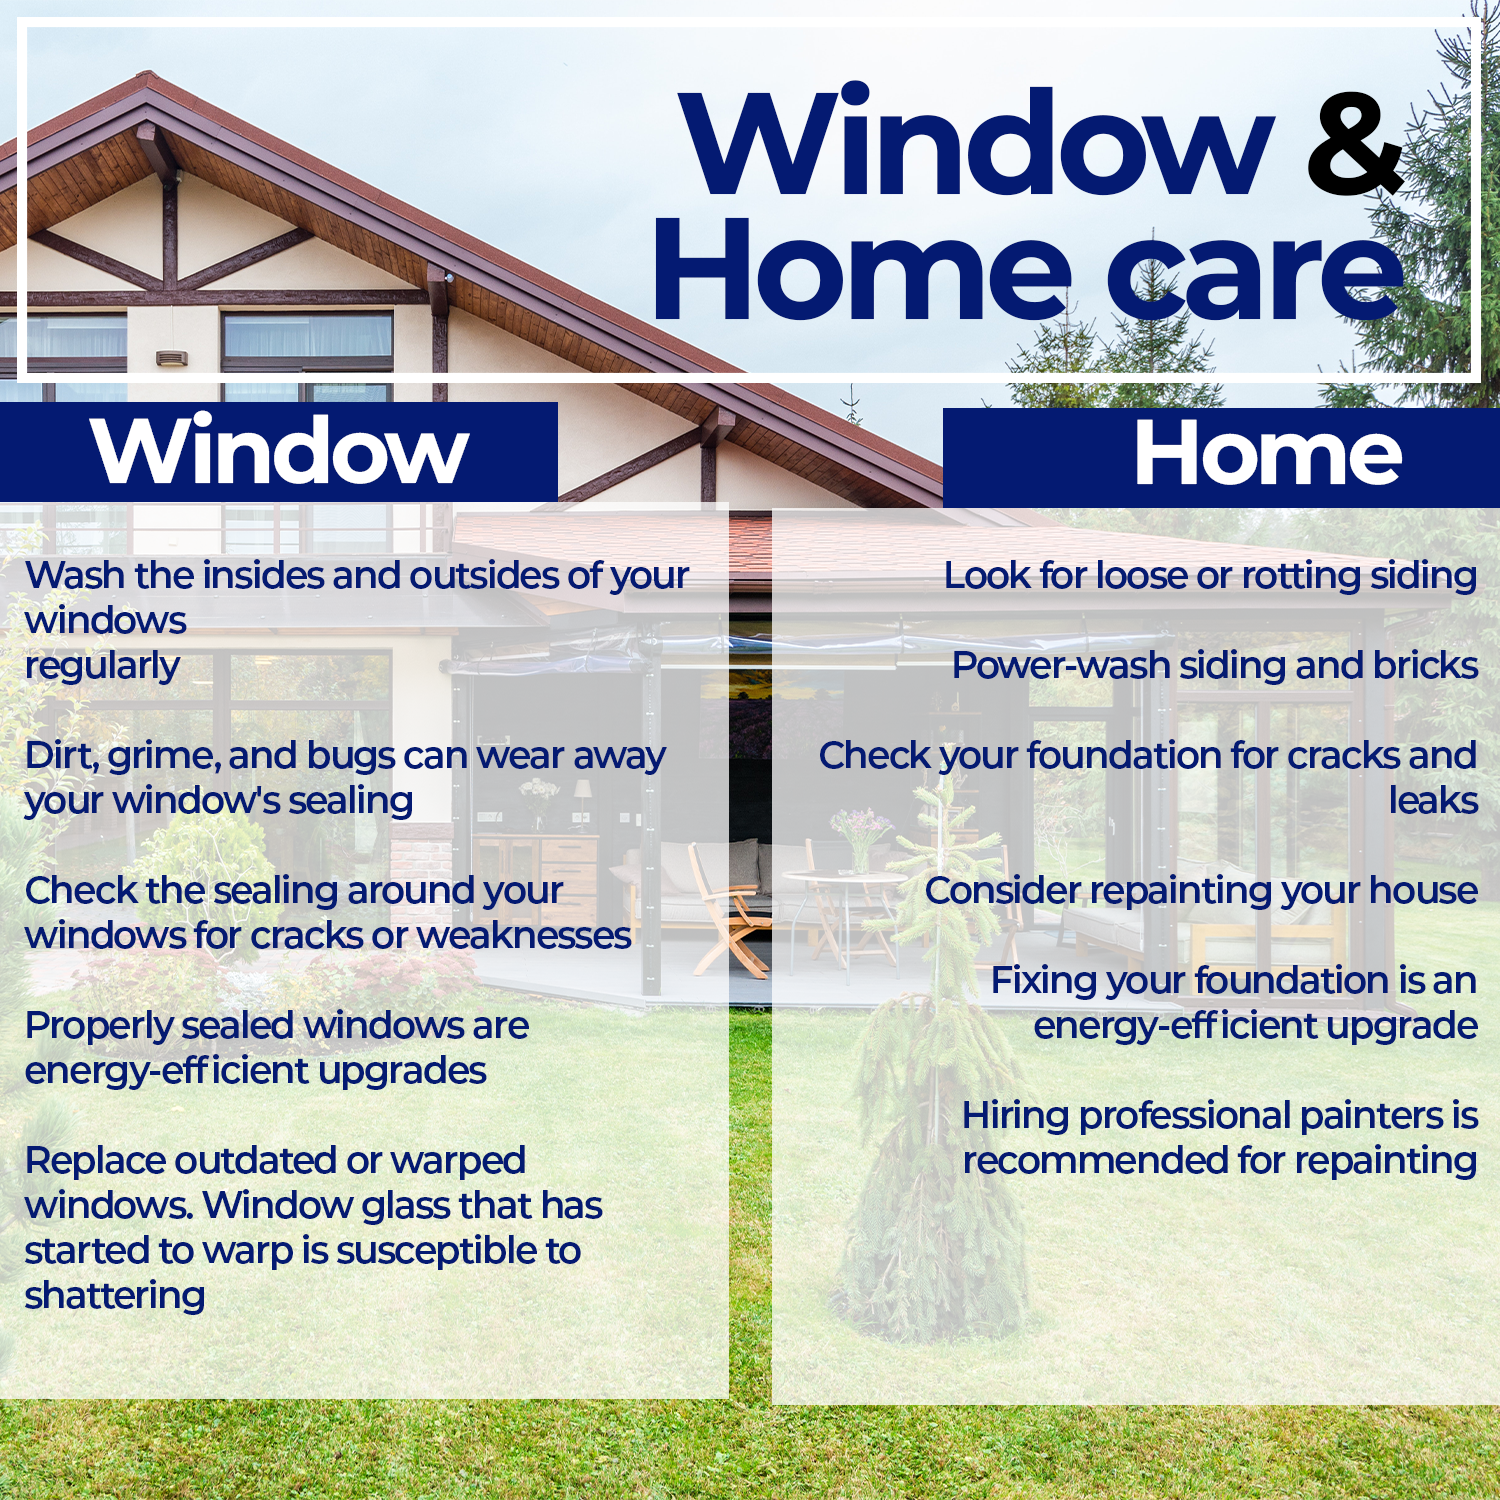 Window & Home Care